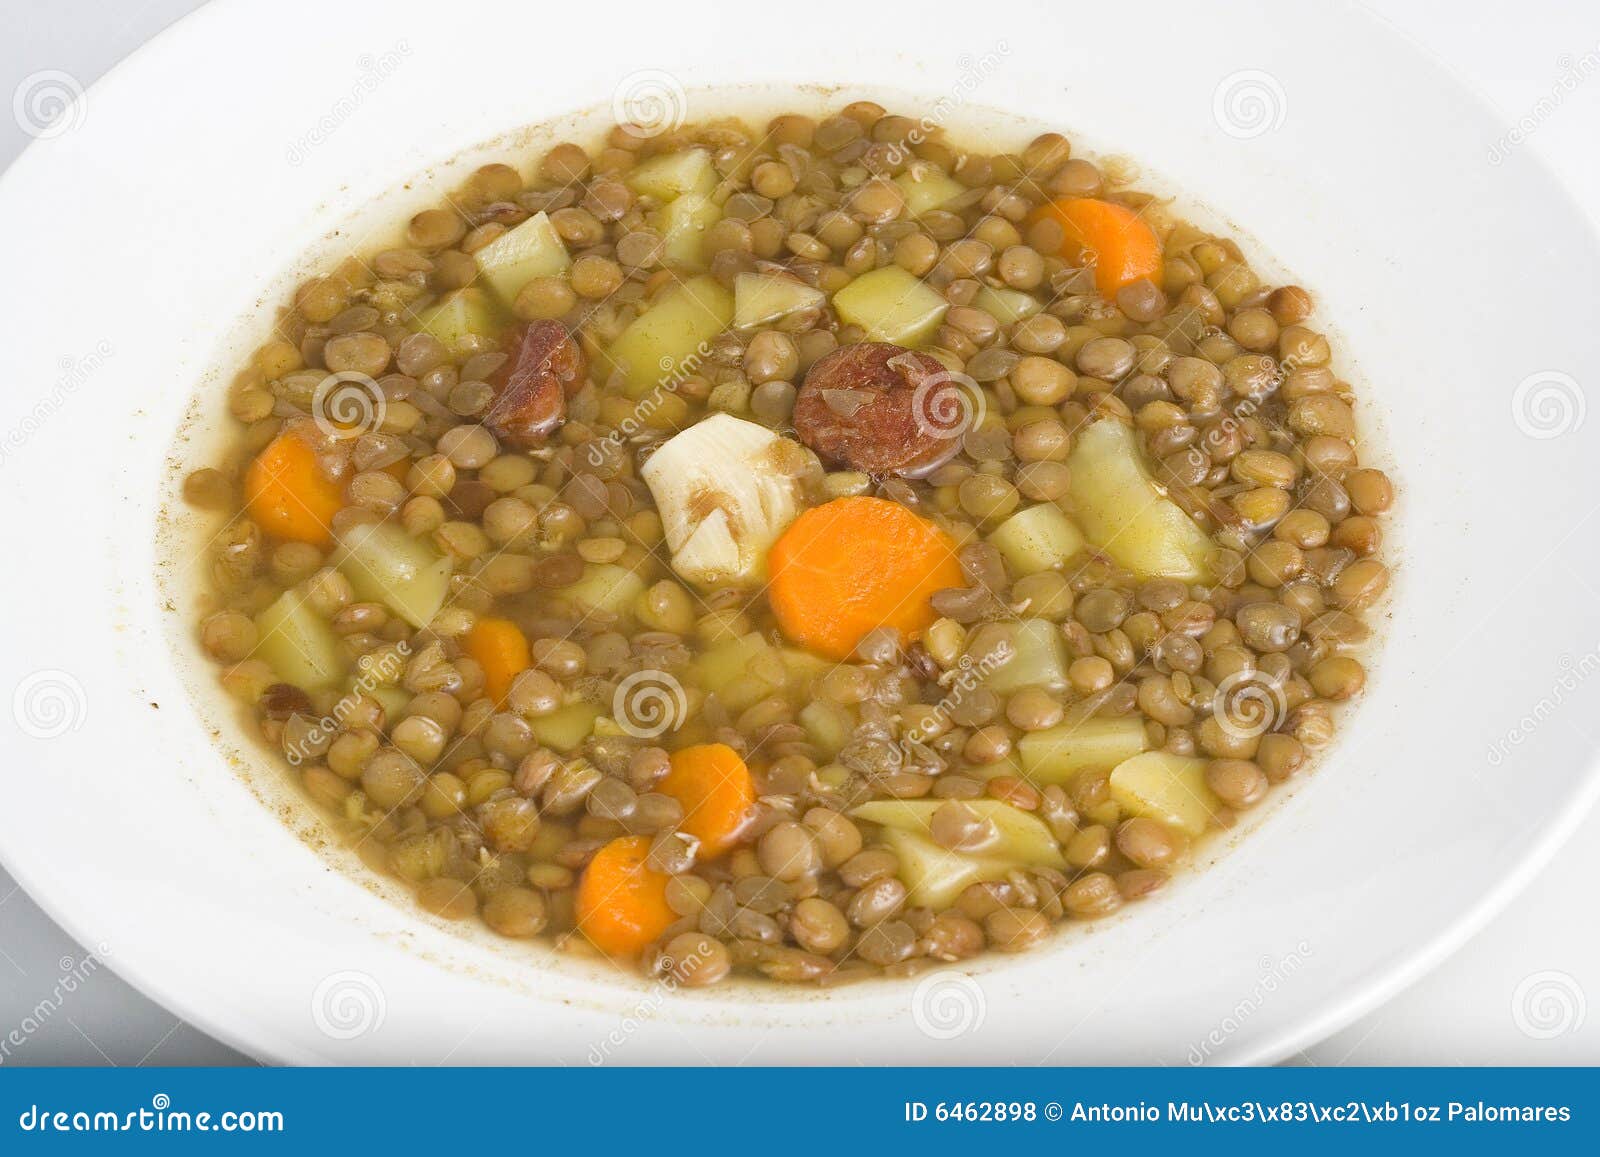 homemade hot dish of lentils